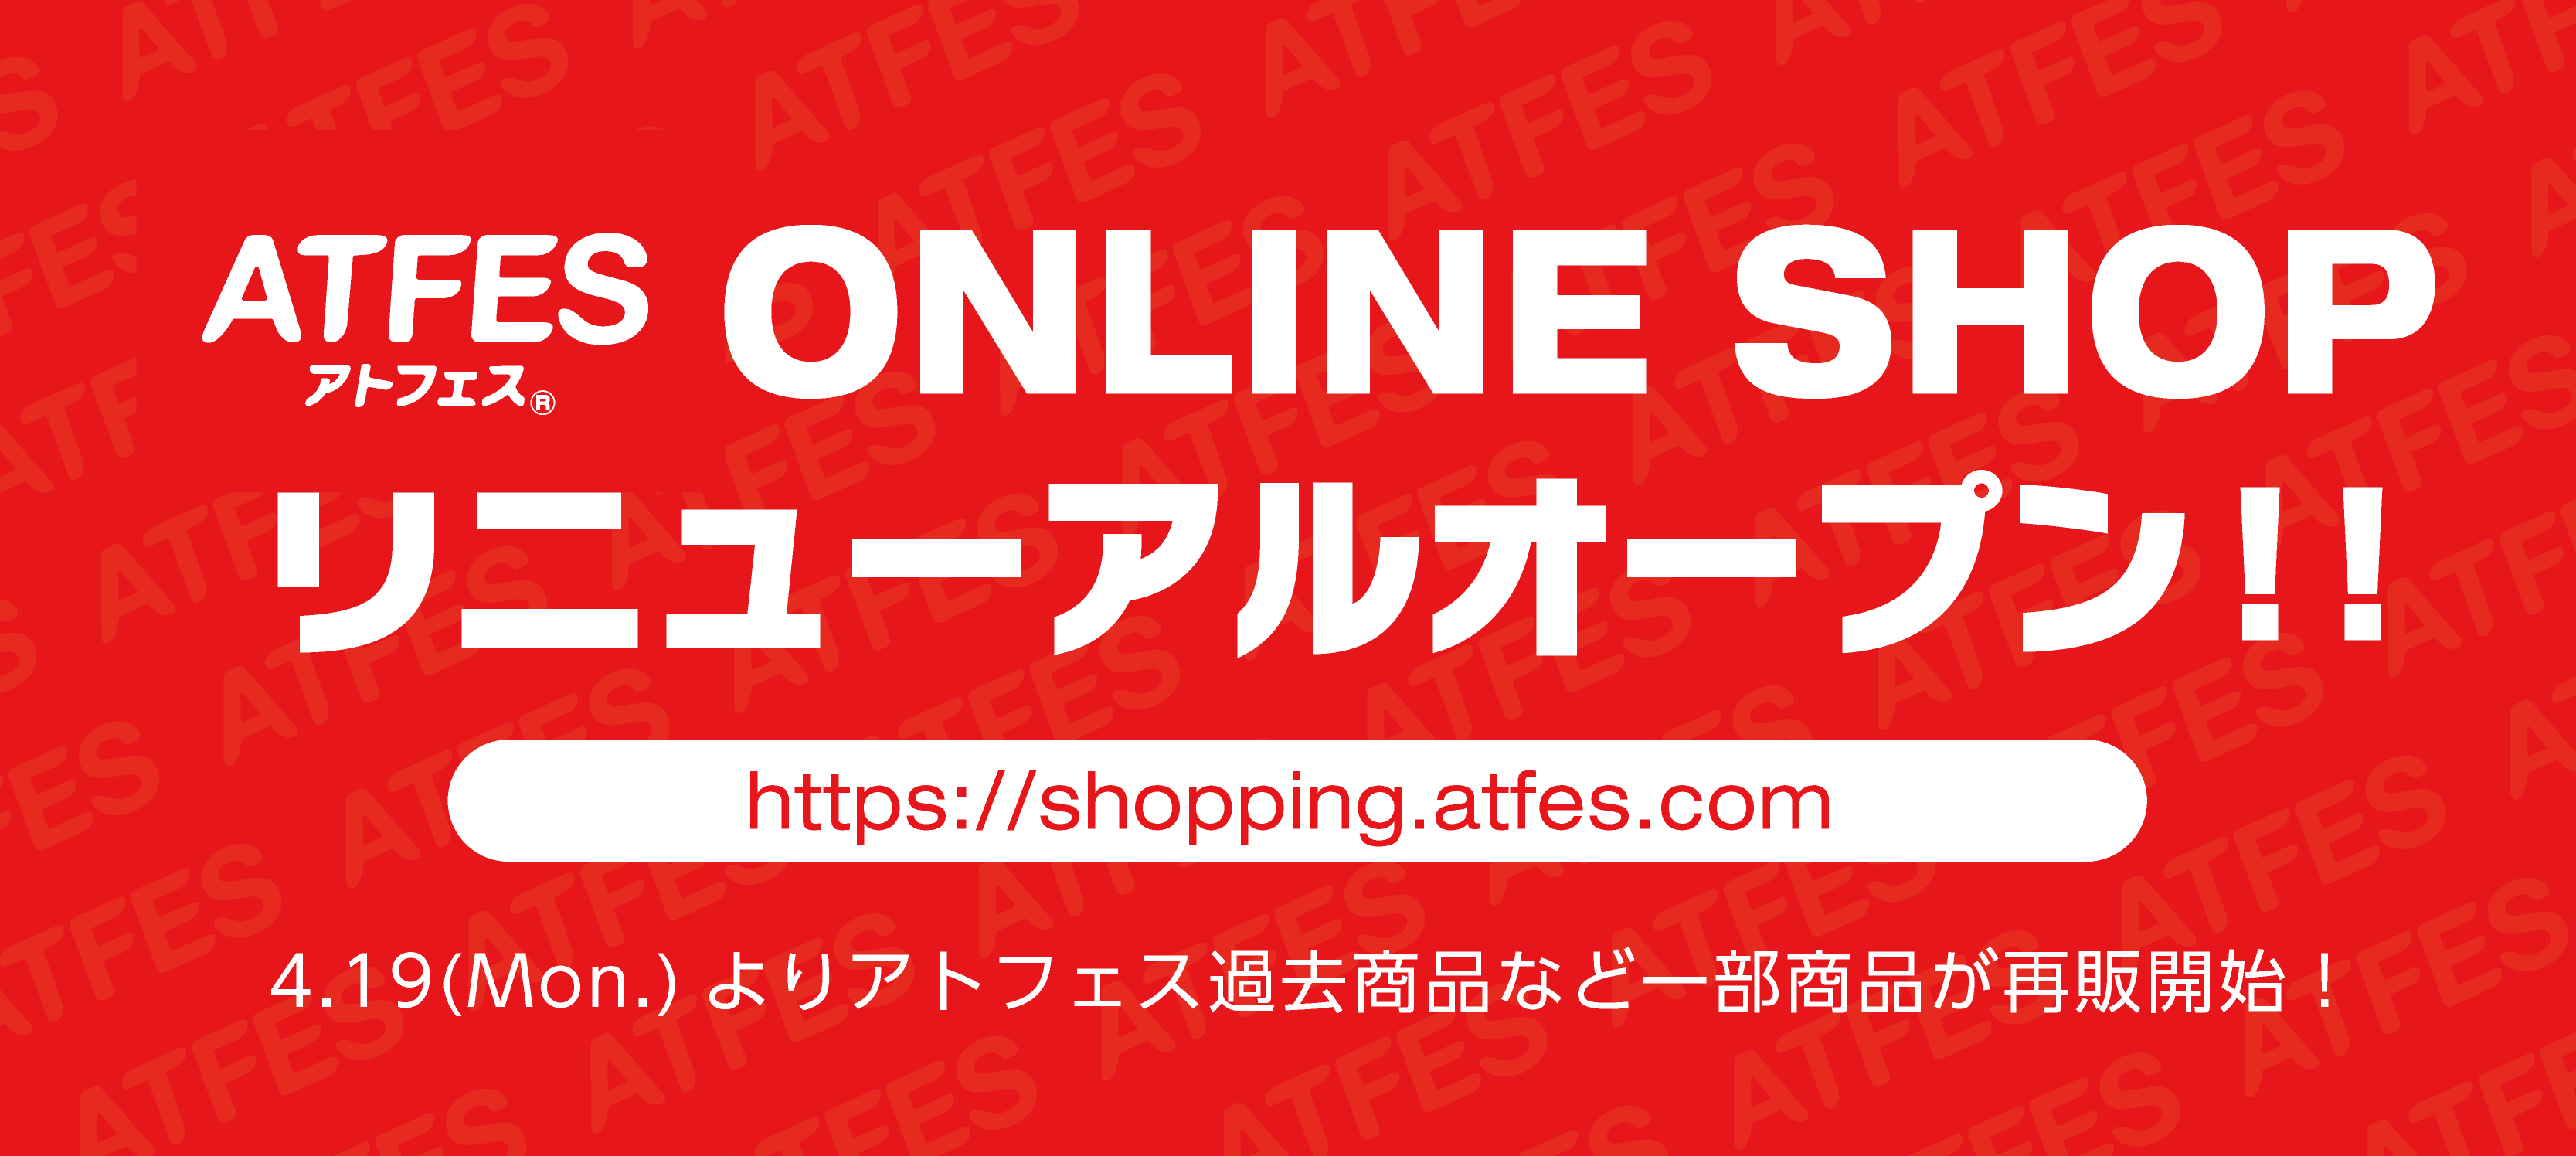 atfes_online_shop.png